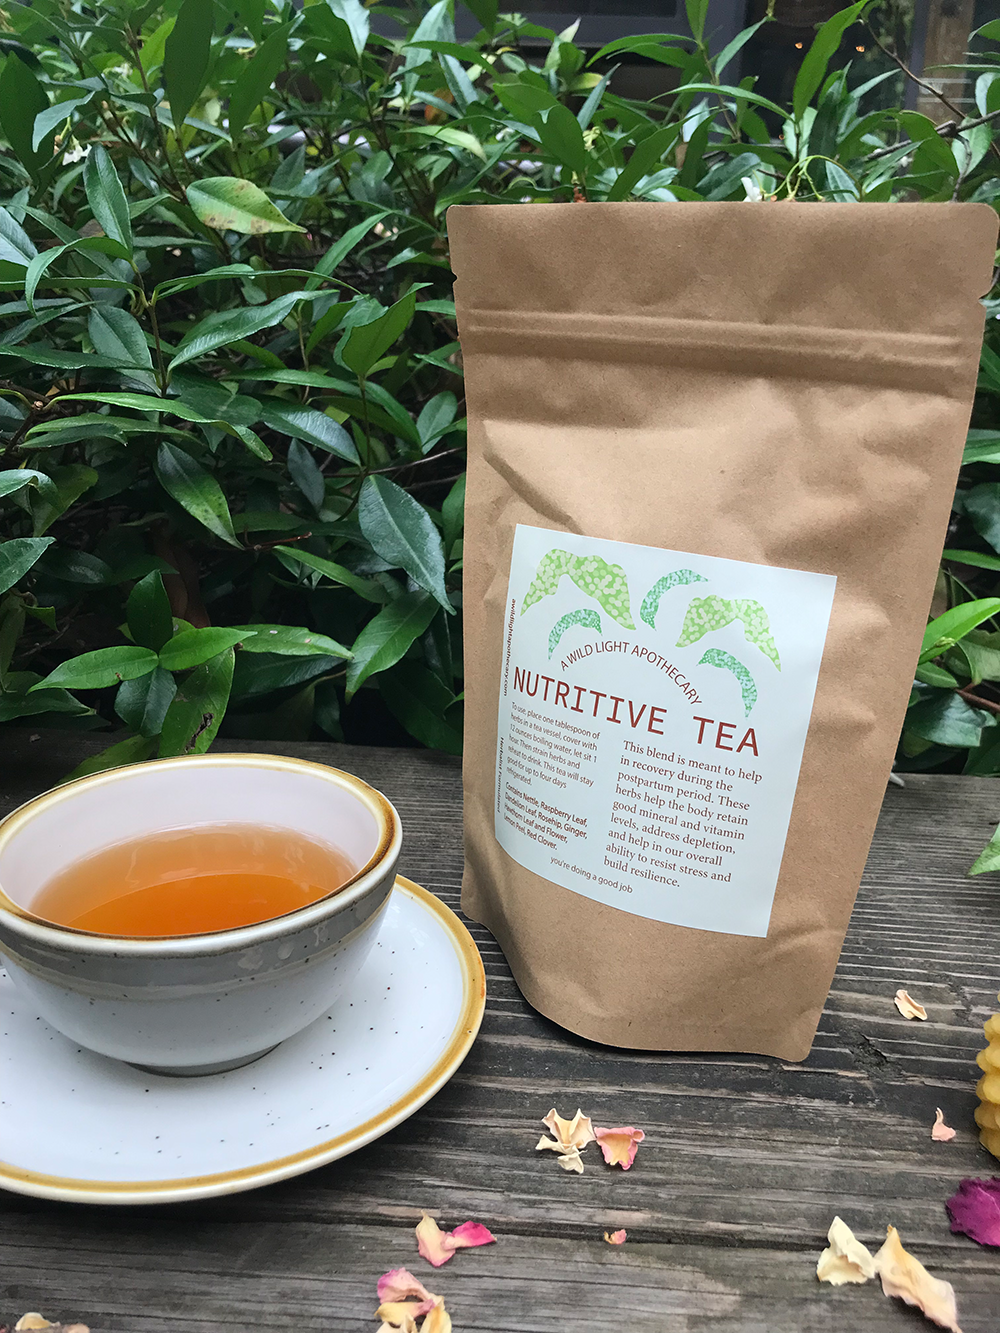 Nutritive Tea By a Wild Light Apothecary